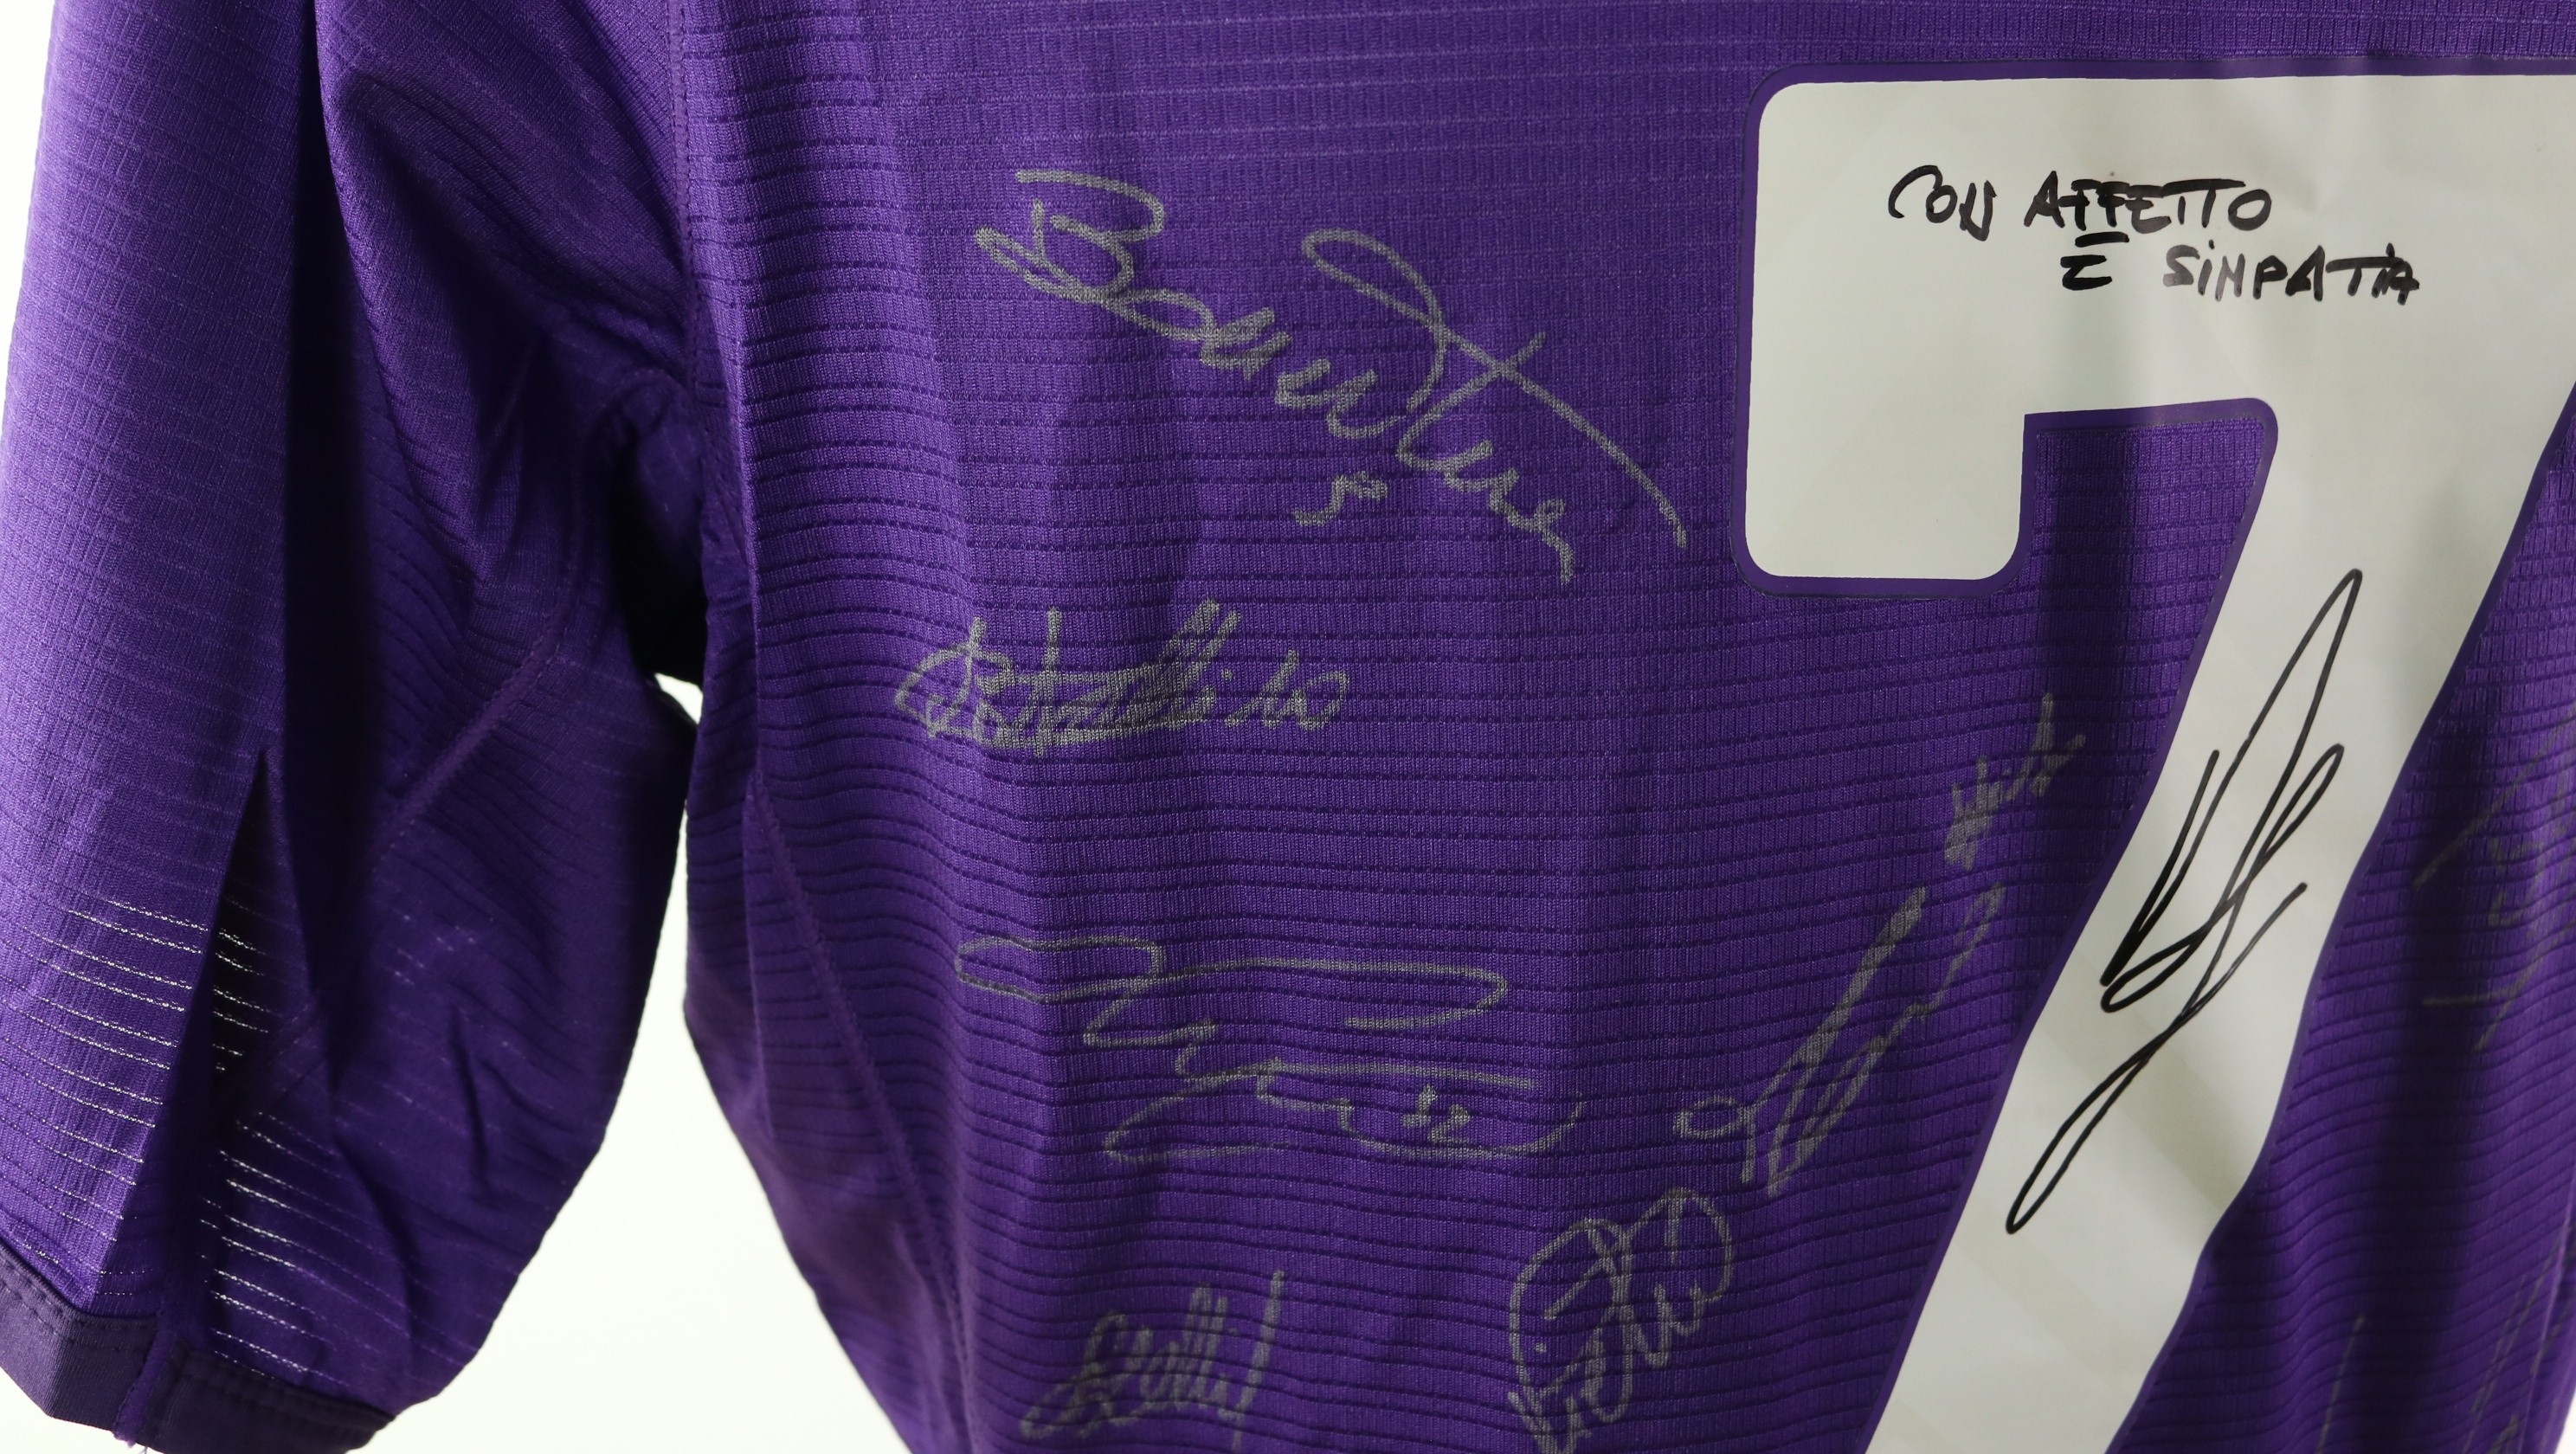 Jovic's Match Shirt, Empoli-Fiorentina 2022 - Signed by the Squad -  CharityStars